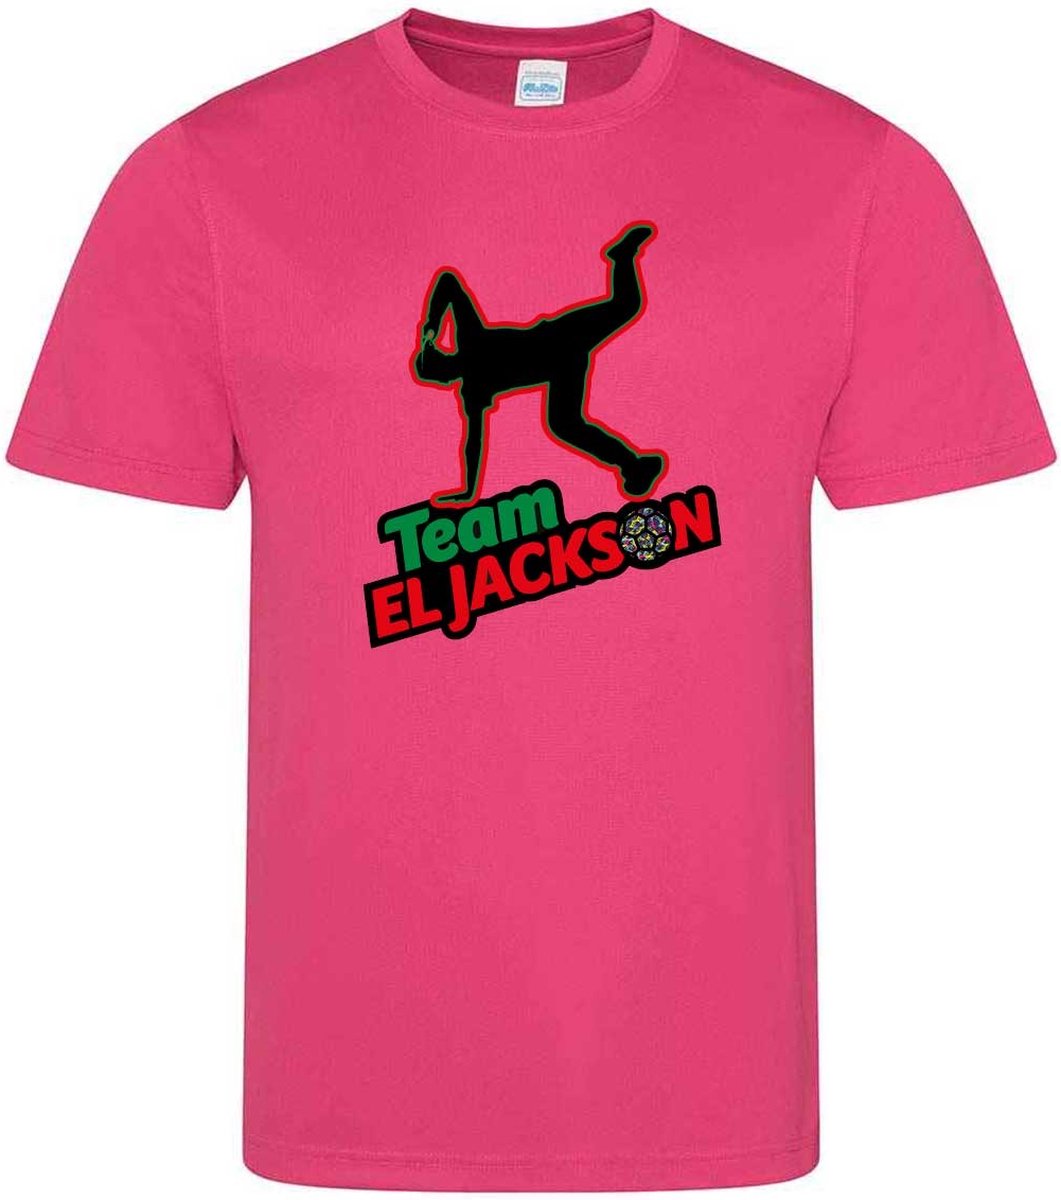 El Jackson T-Shirt - FLOWER PINK - (164-XXL) - VOETBALTSHIRT - SPORTSHIRT